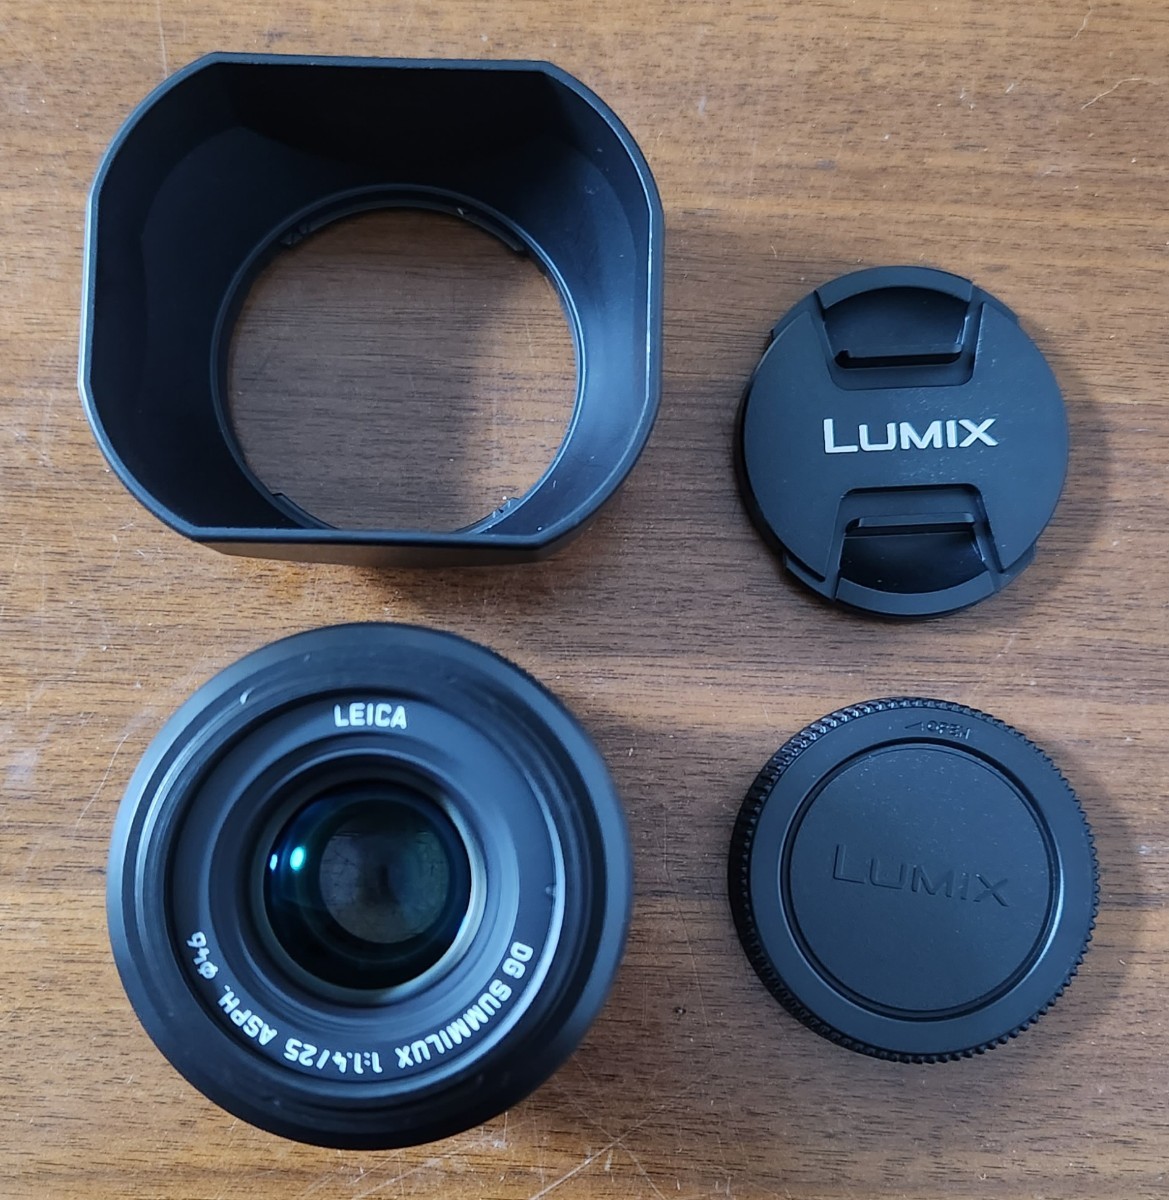 楽天 25mm SUMMILUX DG Leica LUMIX Panasonic f1.4 作動良好